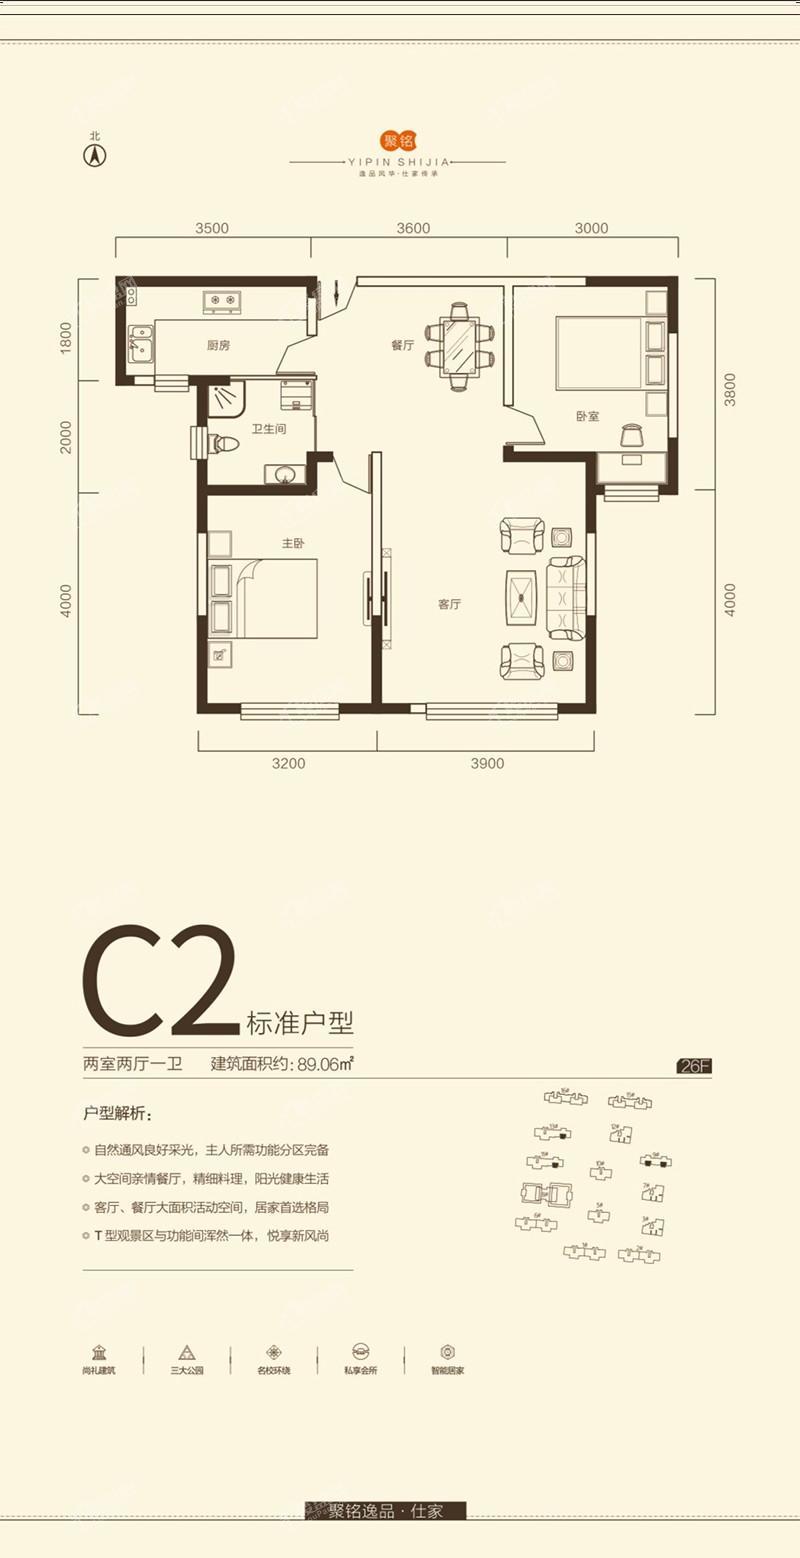 C2户型-两室两厅一卫-89.06平米